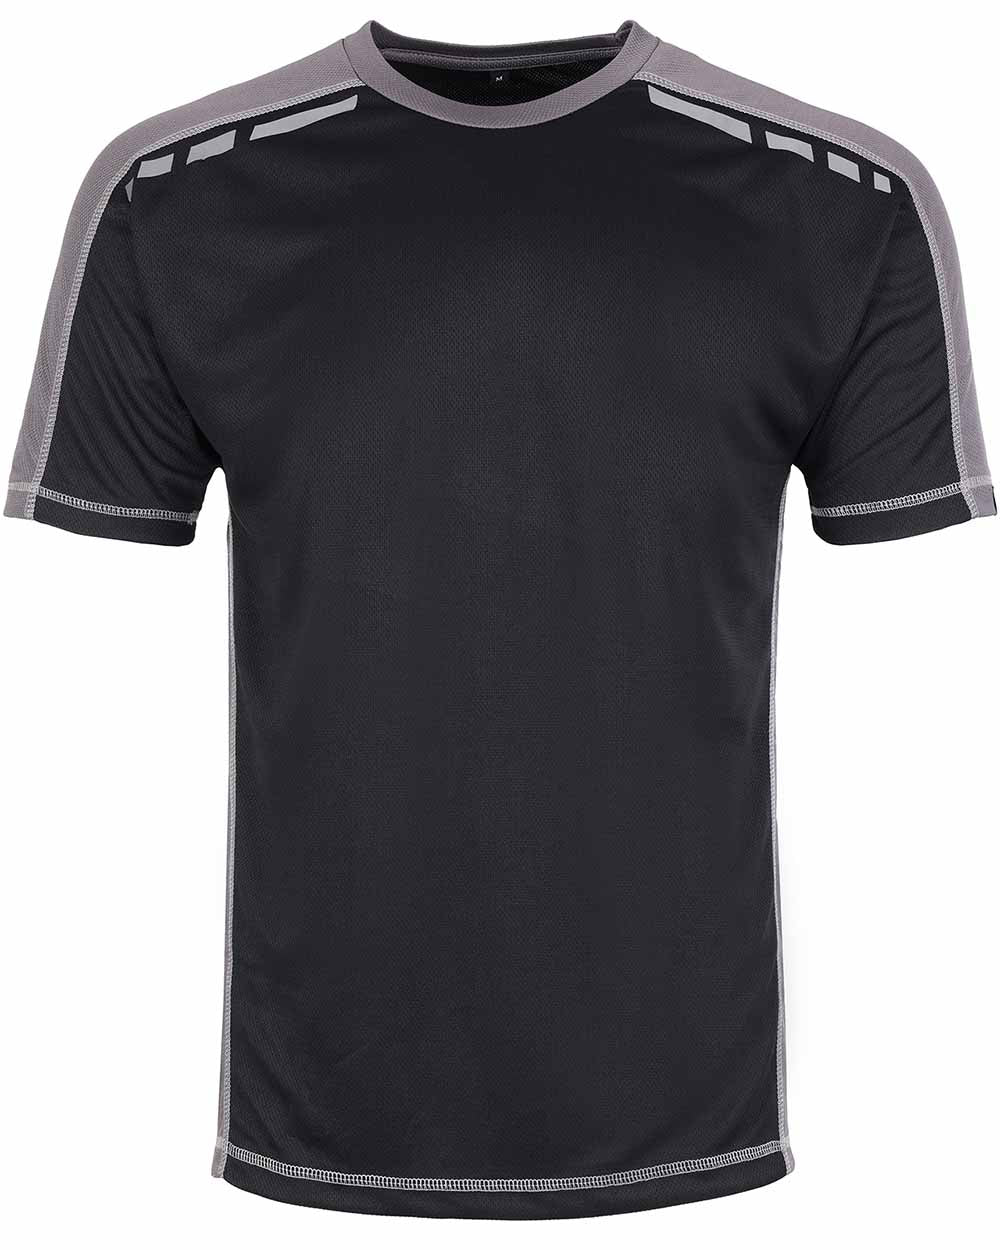 TuffStuff Elite T-shirt in Black with grey trim 